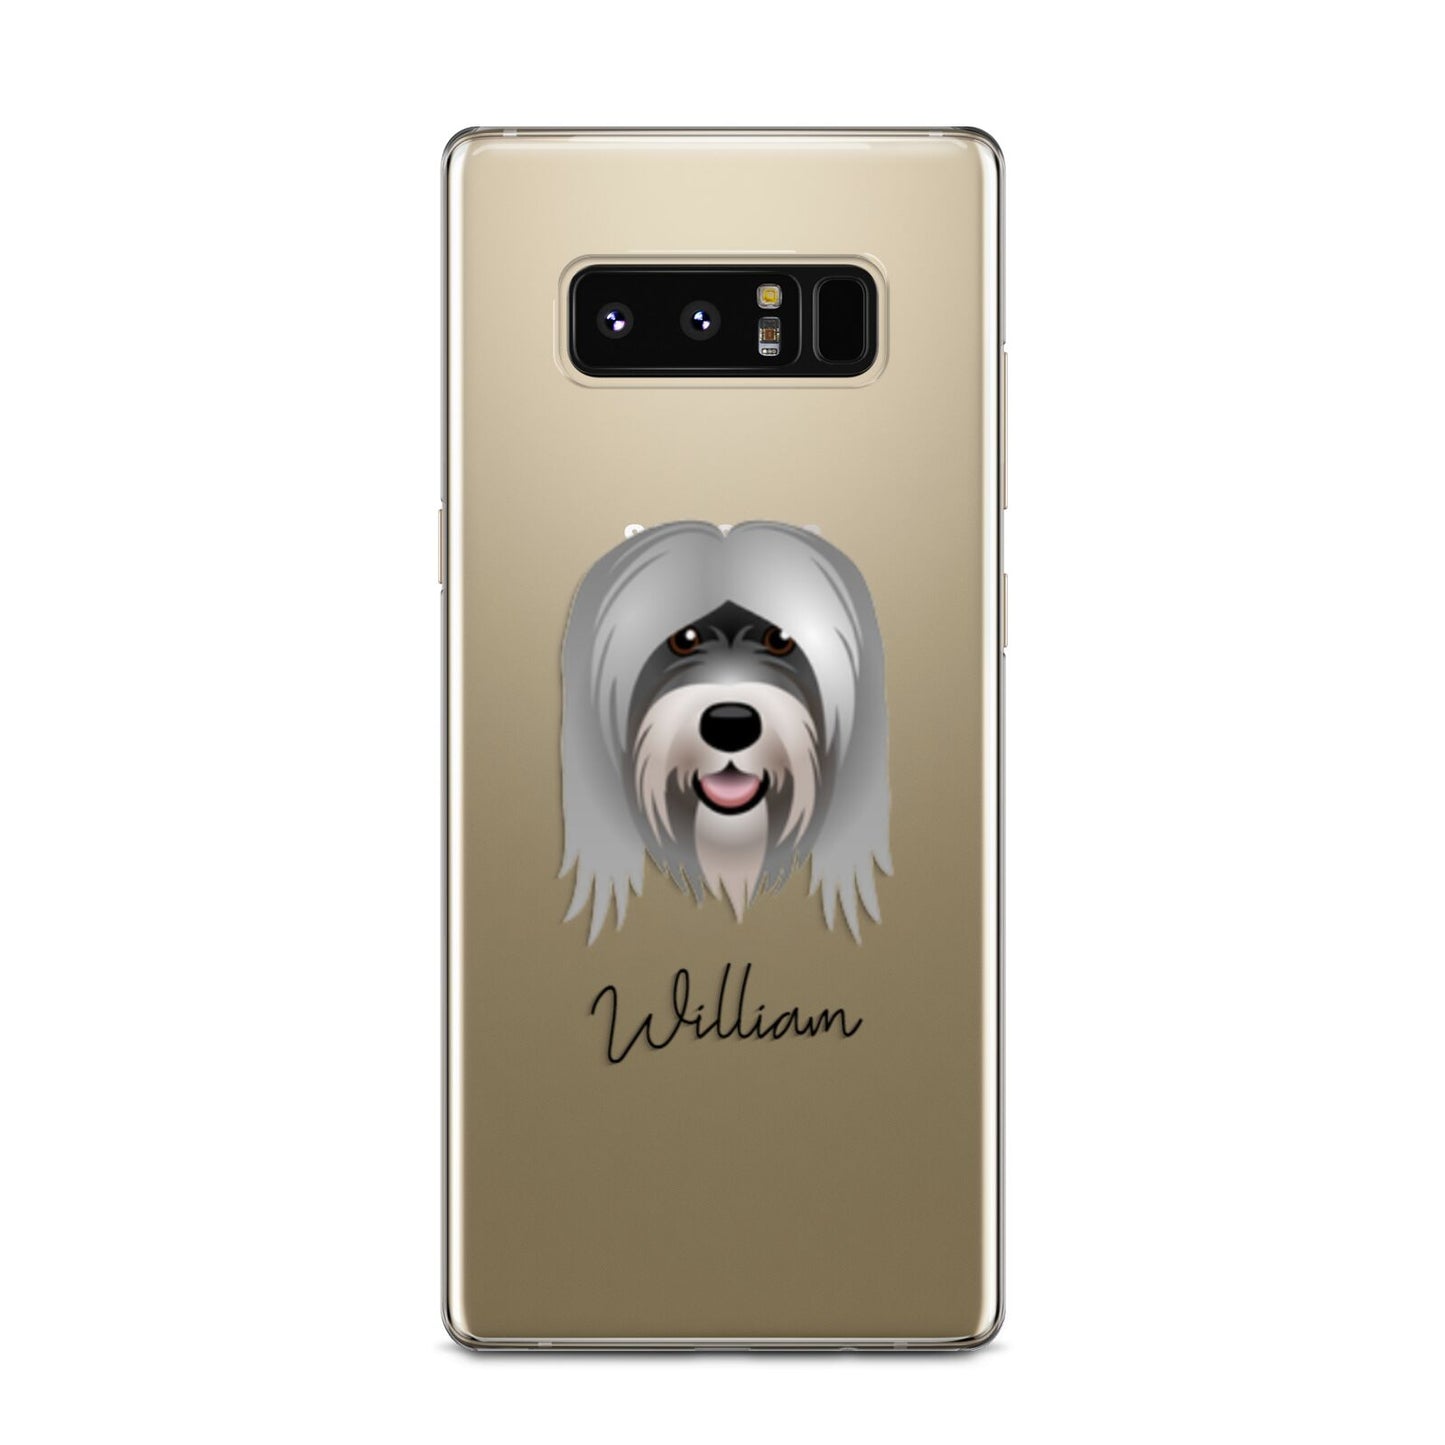 Tibetan Terrier Personalised Samsung Galaxy Note 8 Case